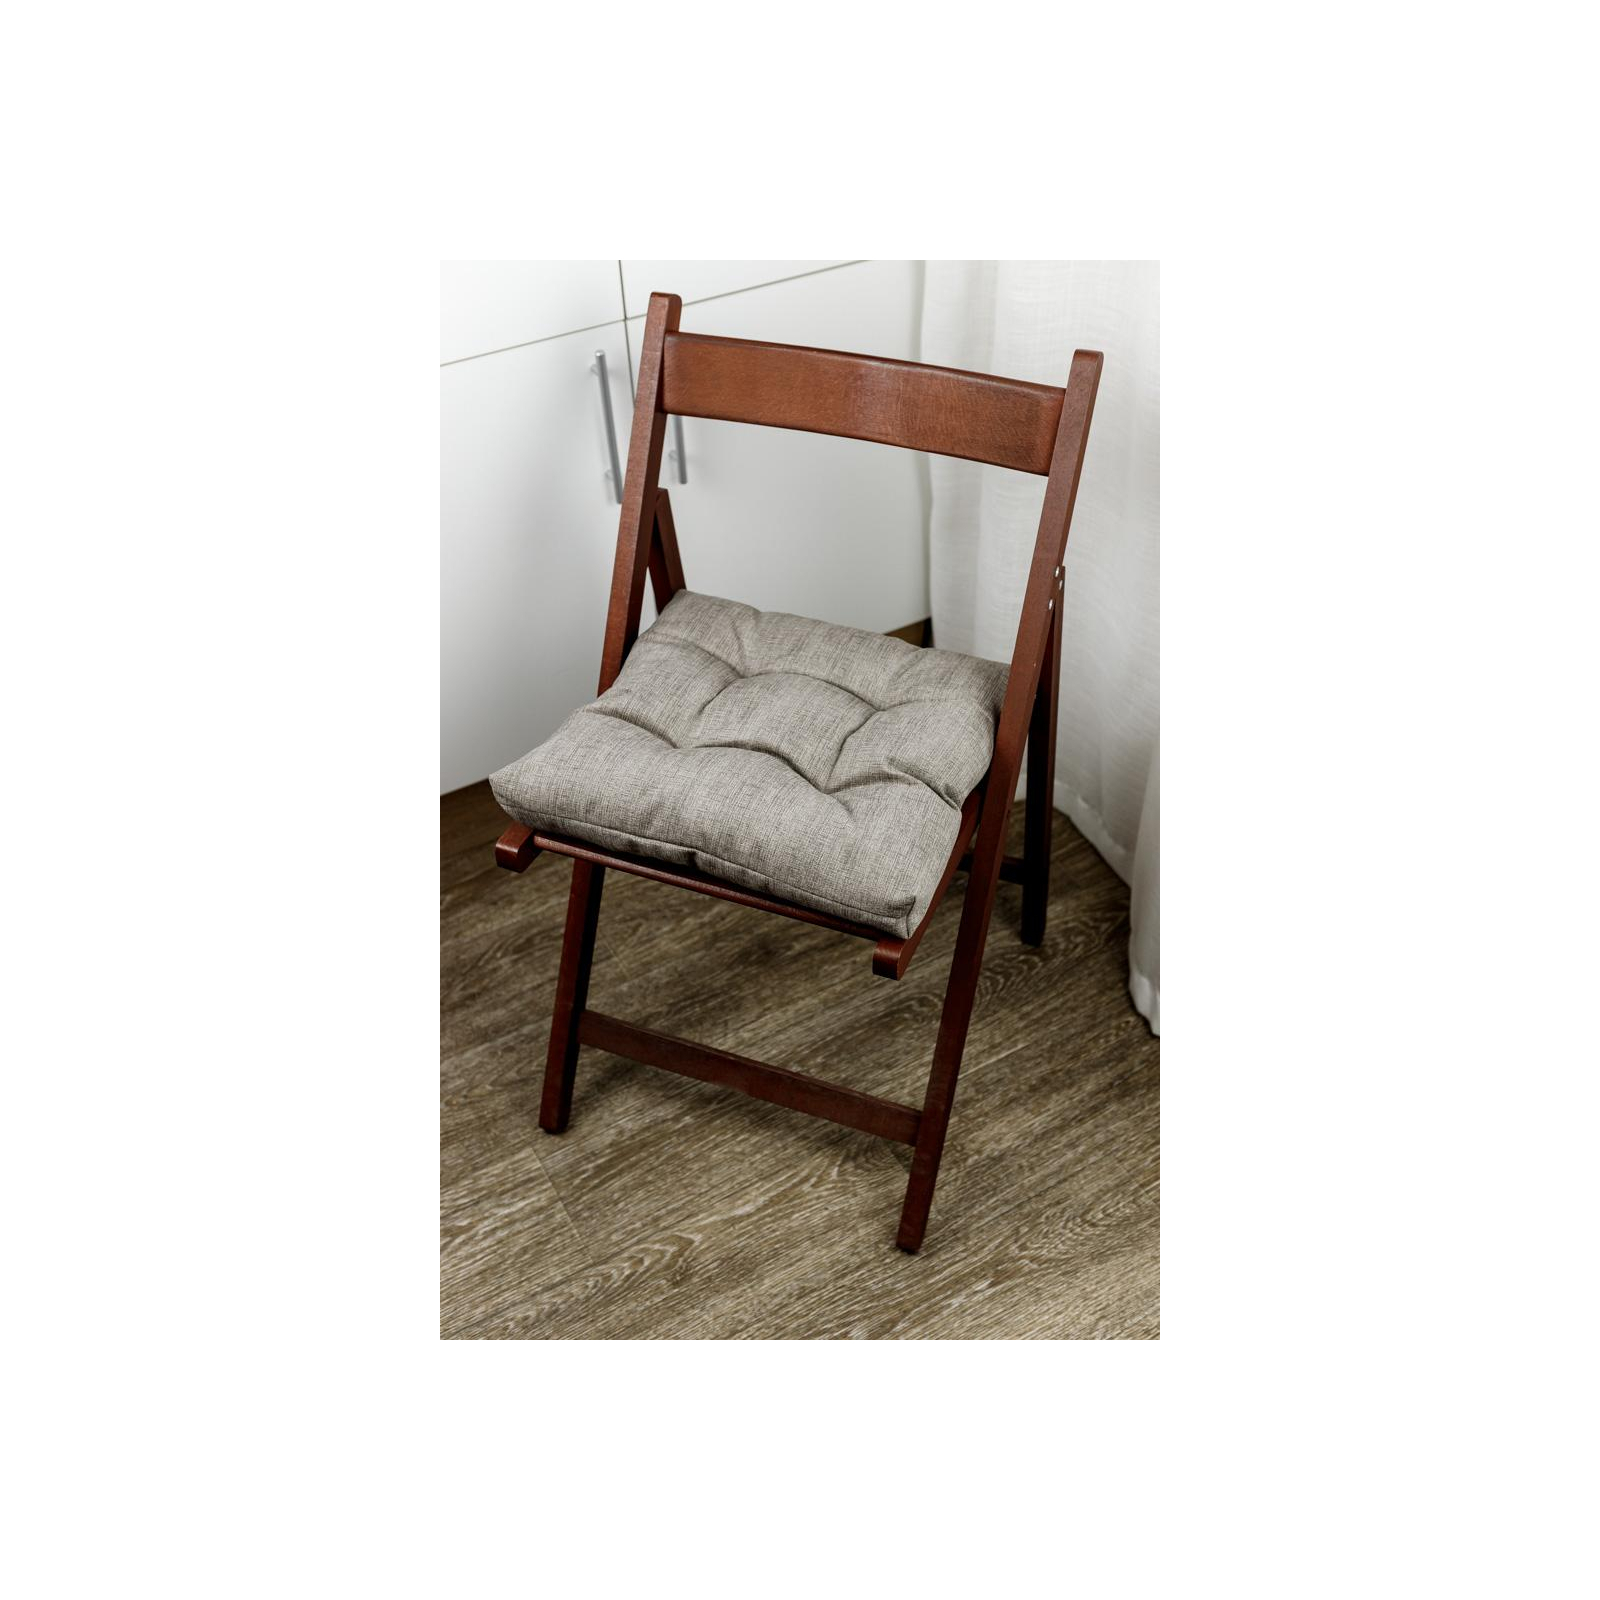 Подушка на стул Прованс FIESTA Бордо 40х40 см (33512) изображение 2